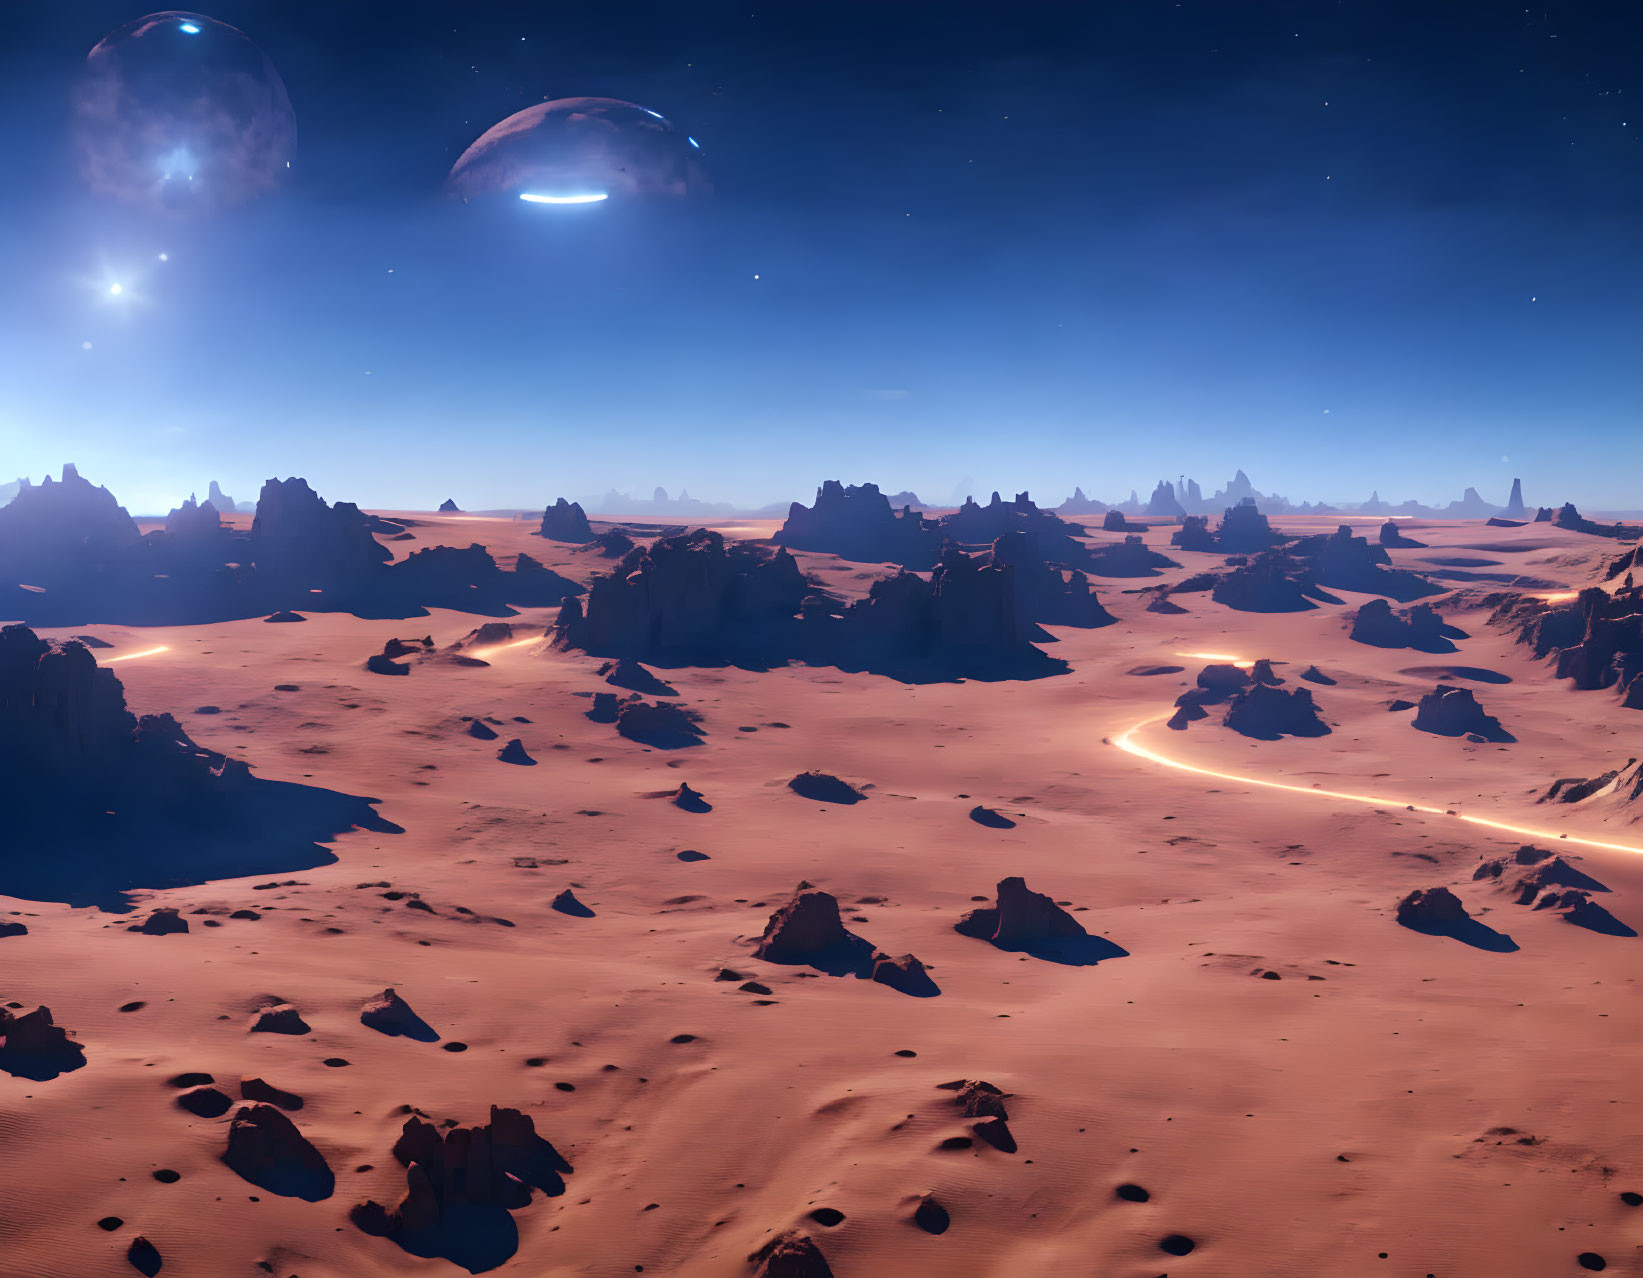 Sci-fi desert landscape: rocky formations, glowing path, celestial bodies